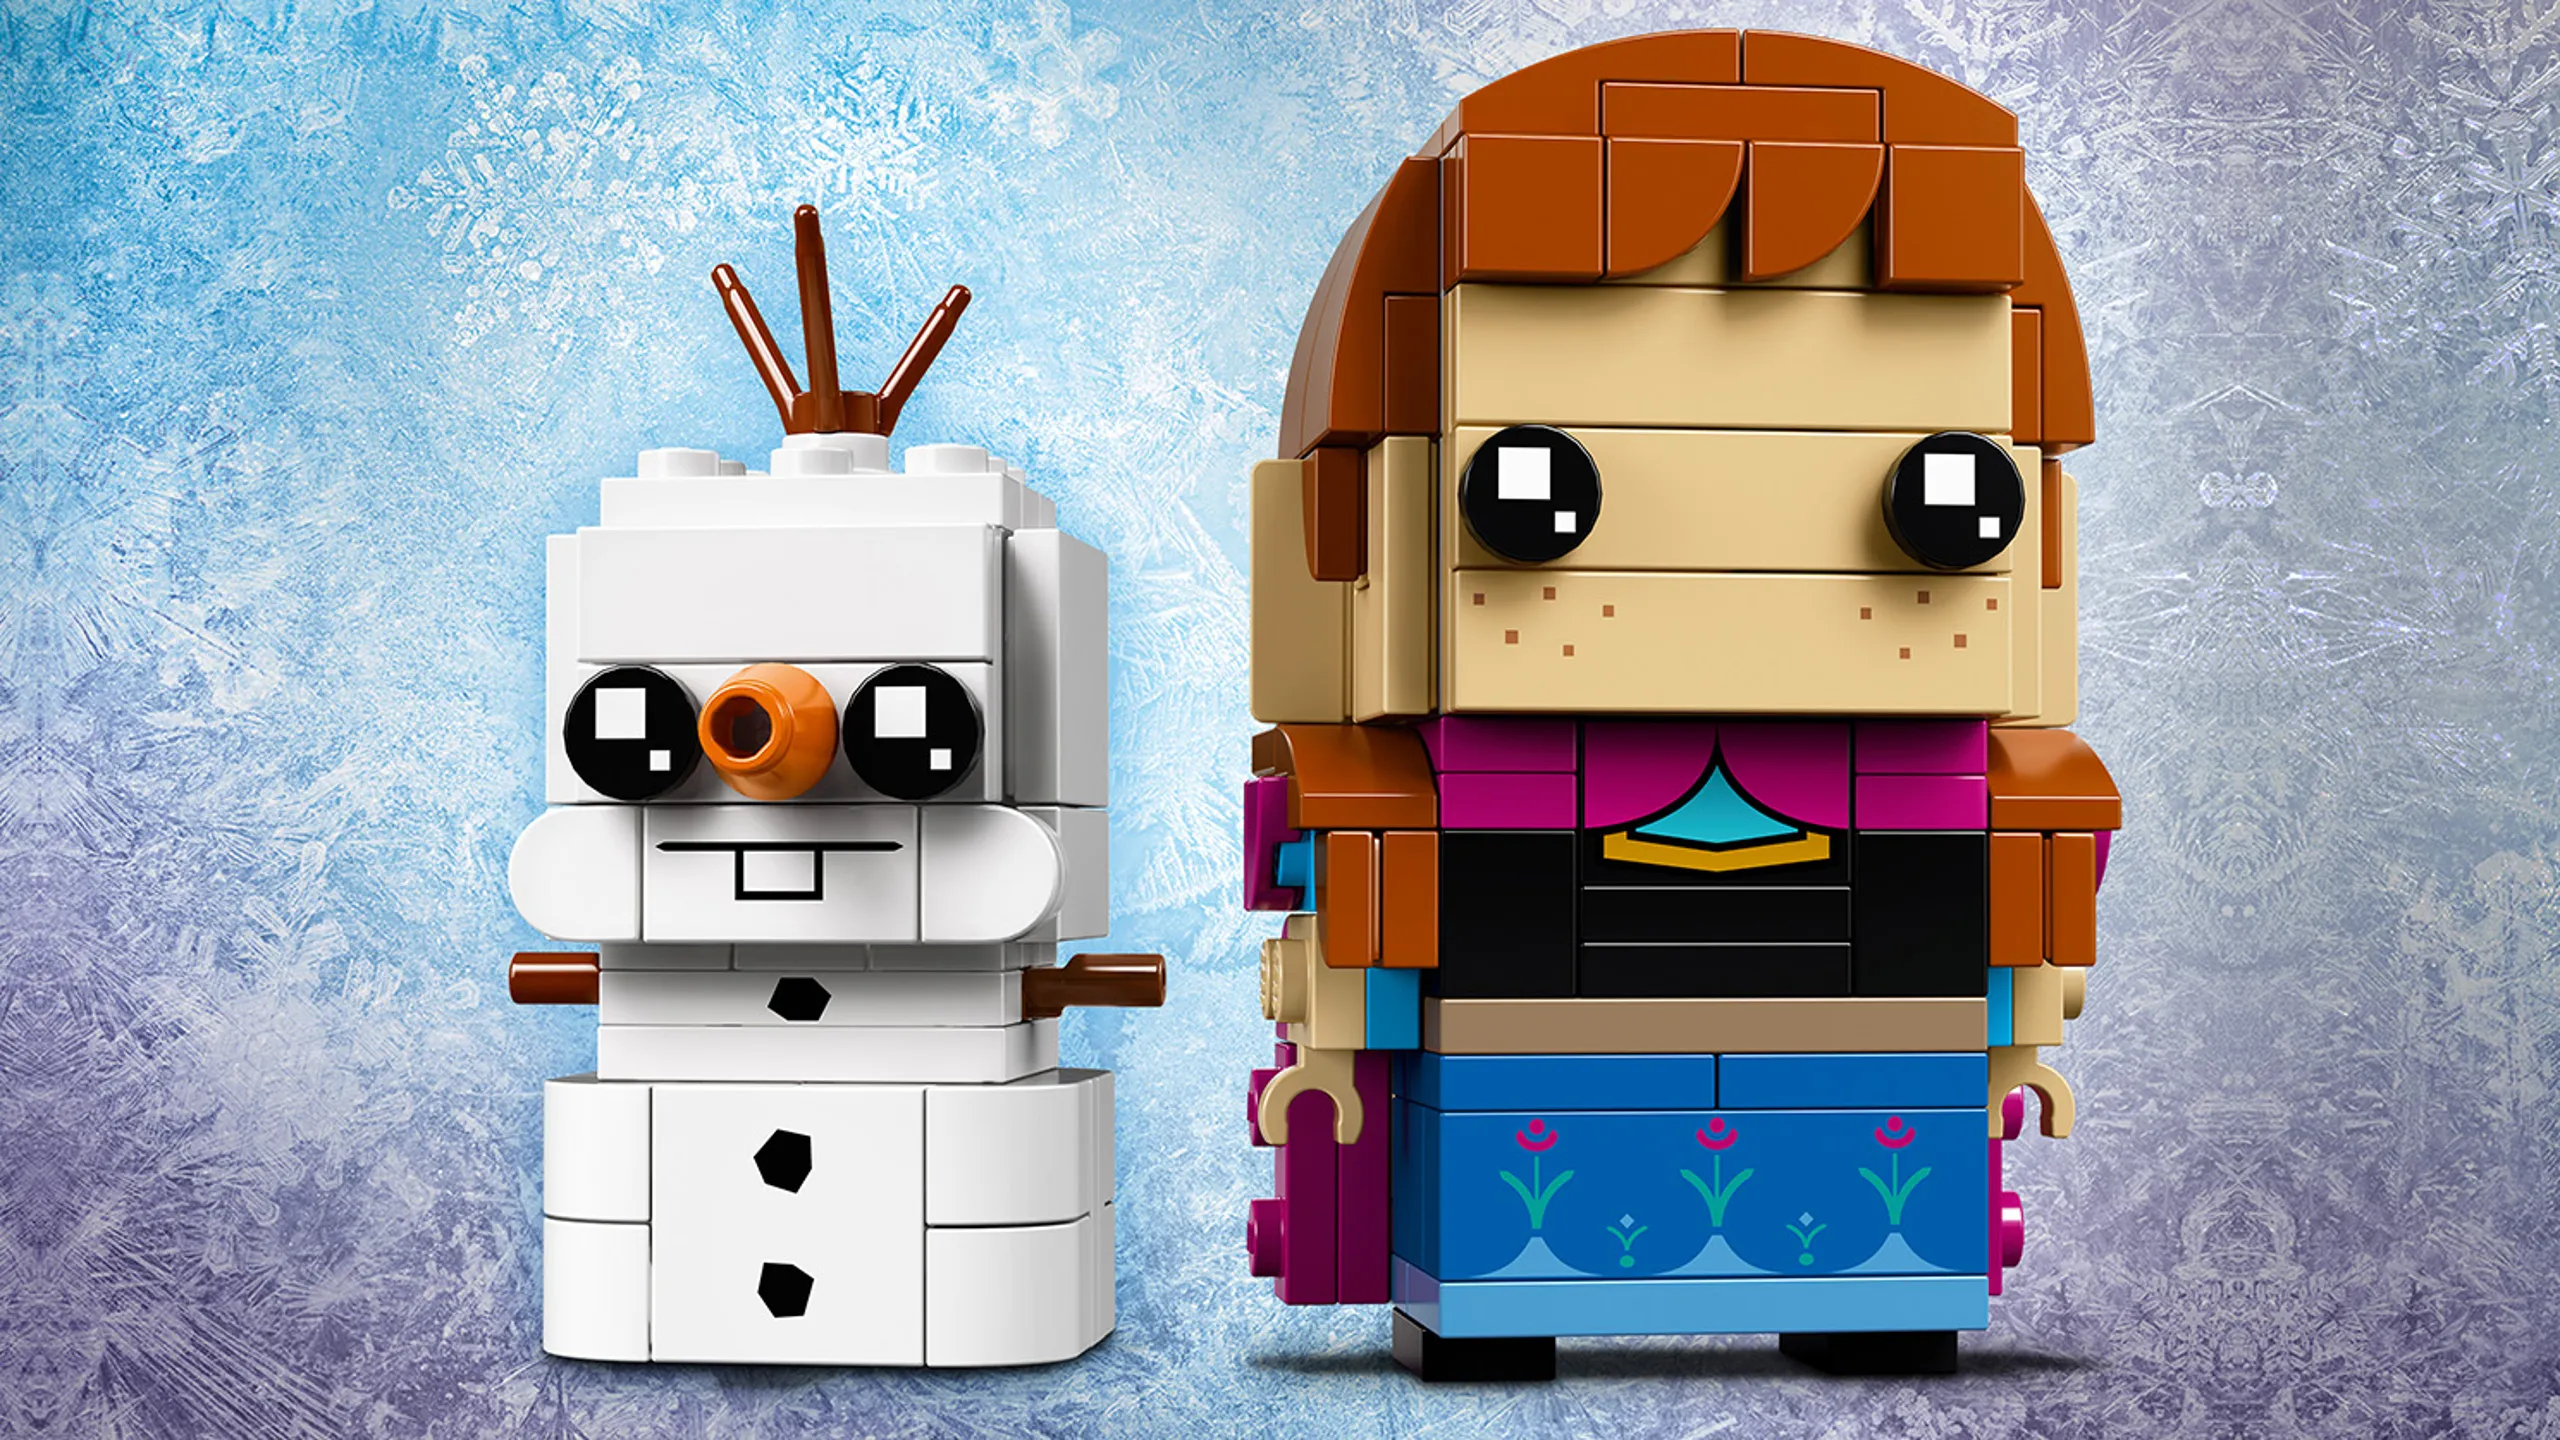 LEGO Brickheadz - 41618 Anna & Olaf - Build LEGO Brickheadz version of Anna and Olaf from Disney movie Frozen! Check out Olaf's carrot nose and Anna's magenta cape.